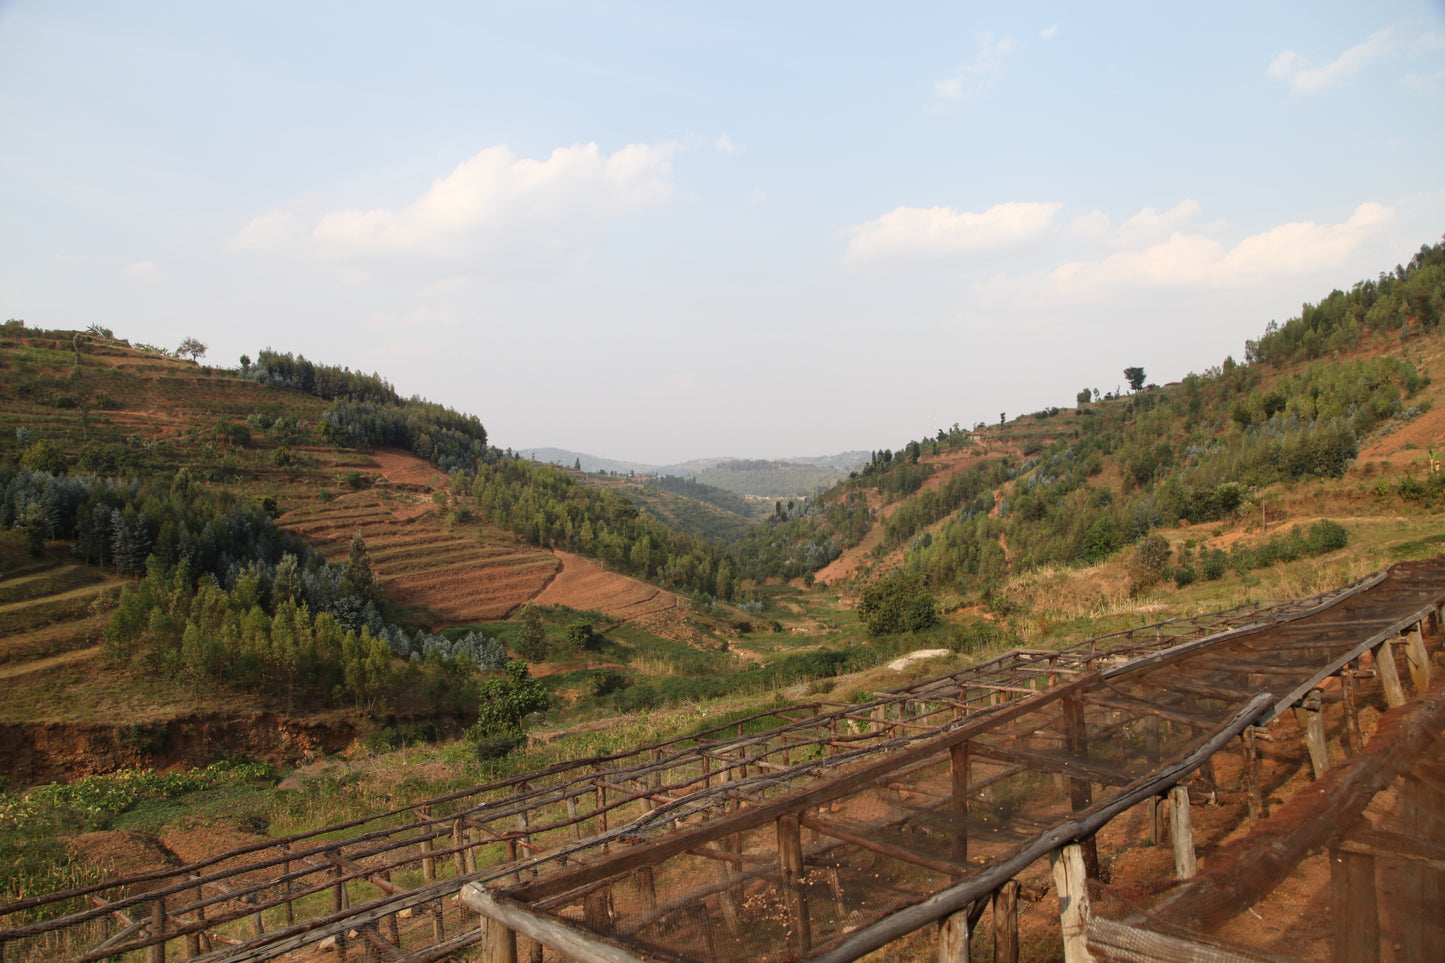 Coffee from Rwanda - Gakenke - 100% Arabica - Organic, Fair Trade